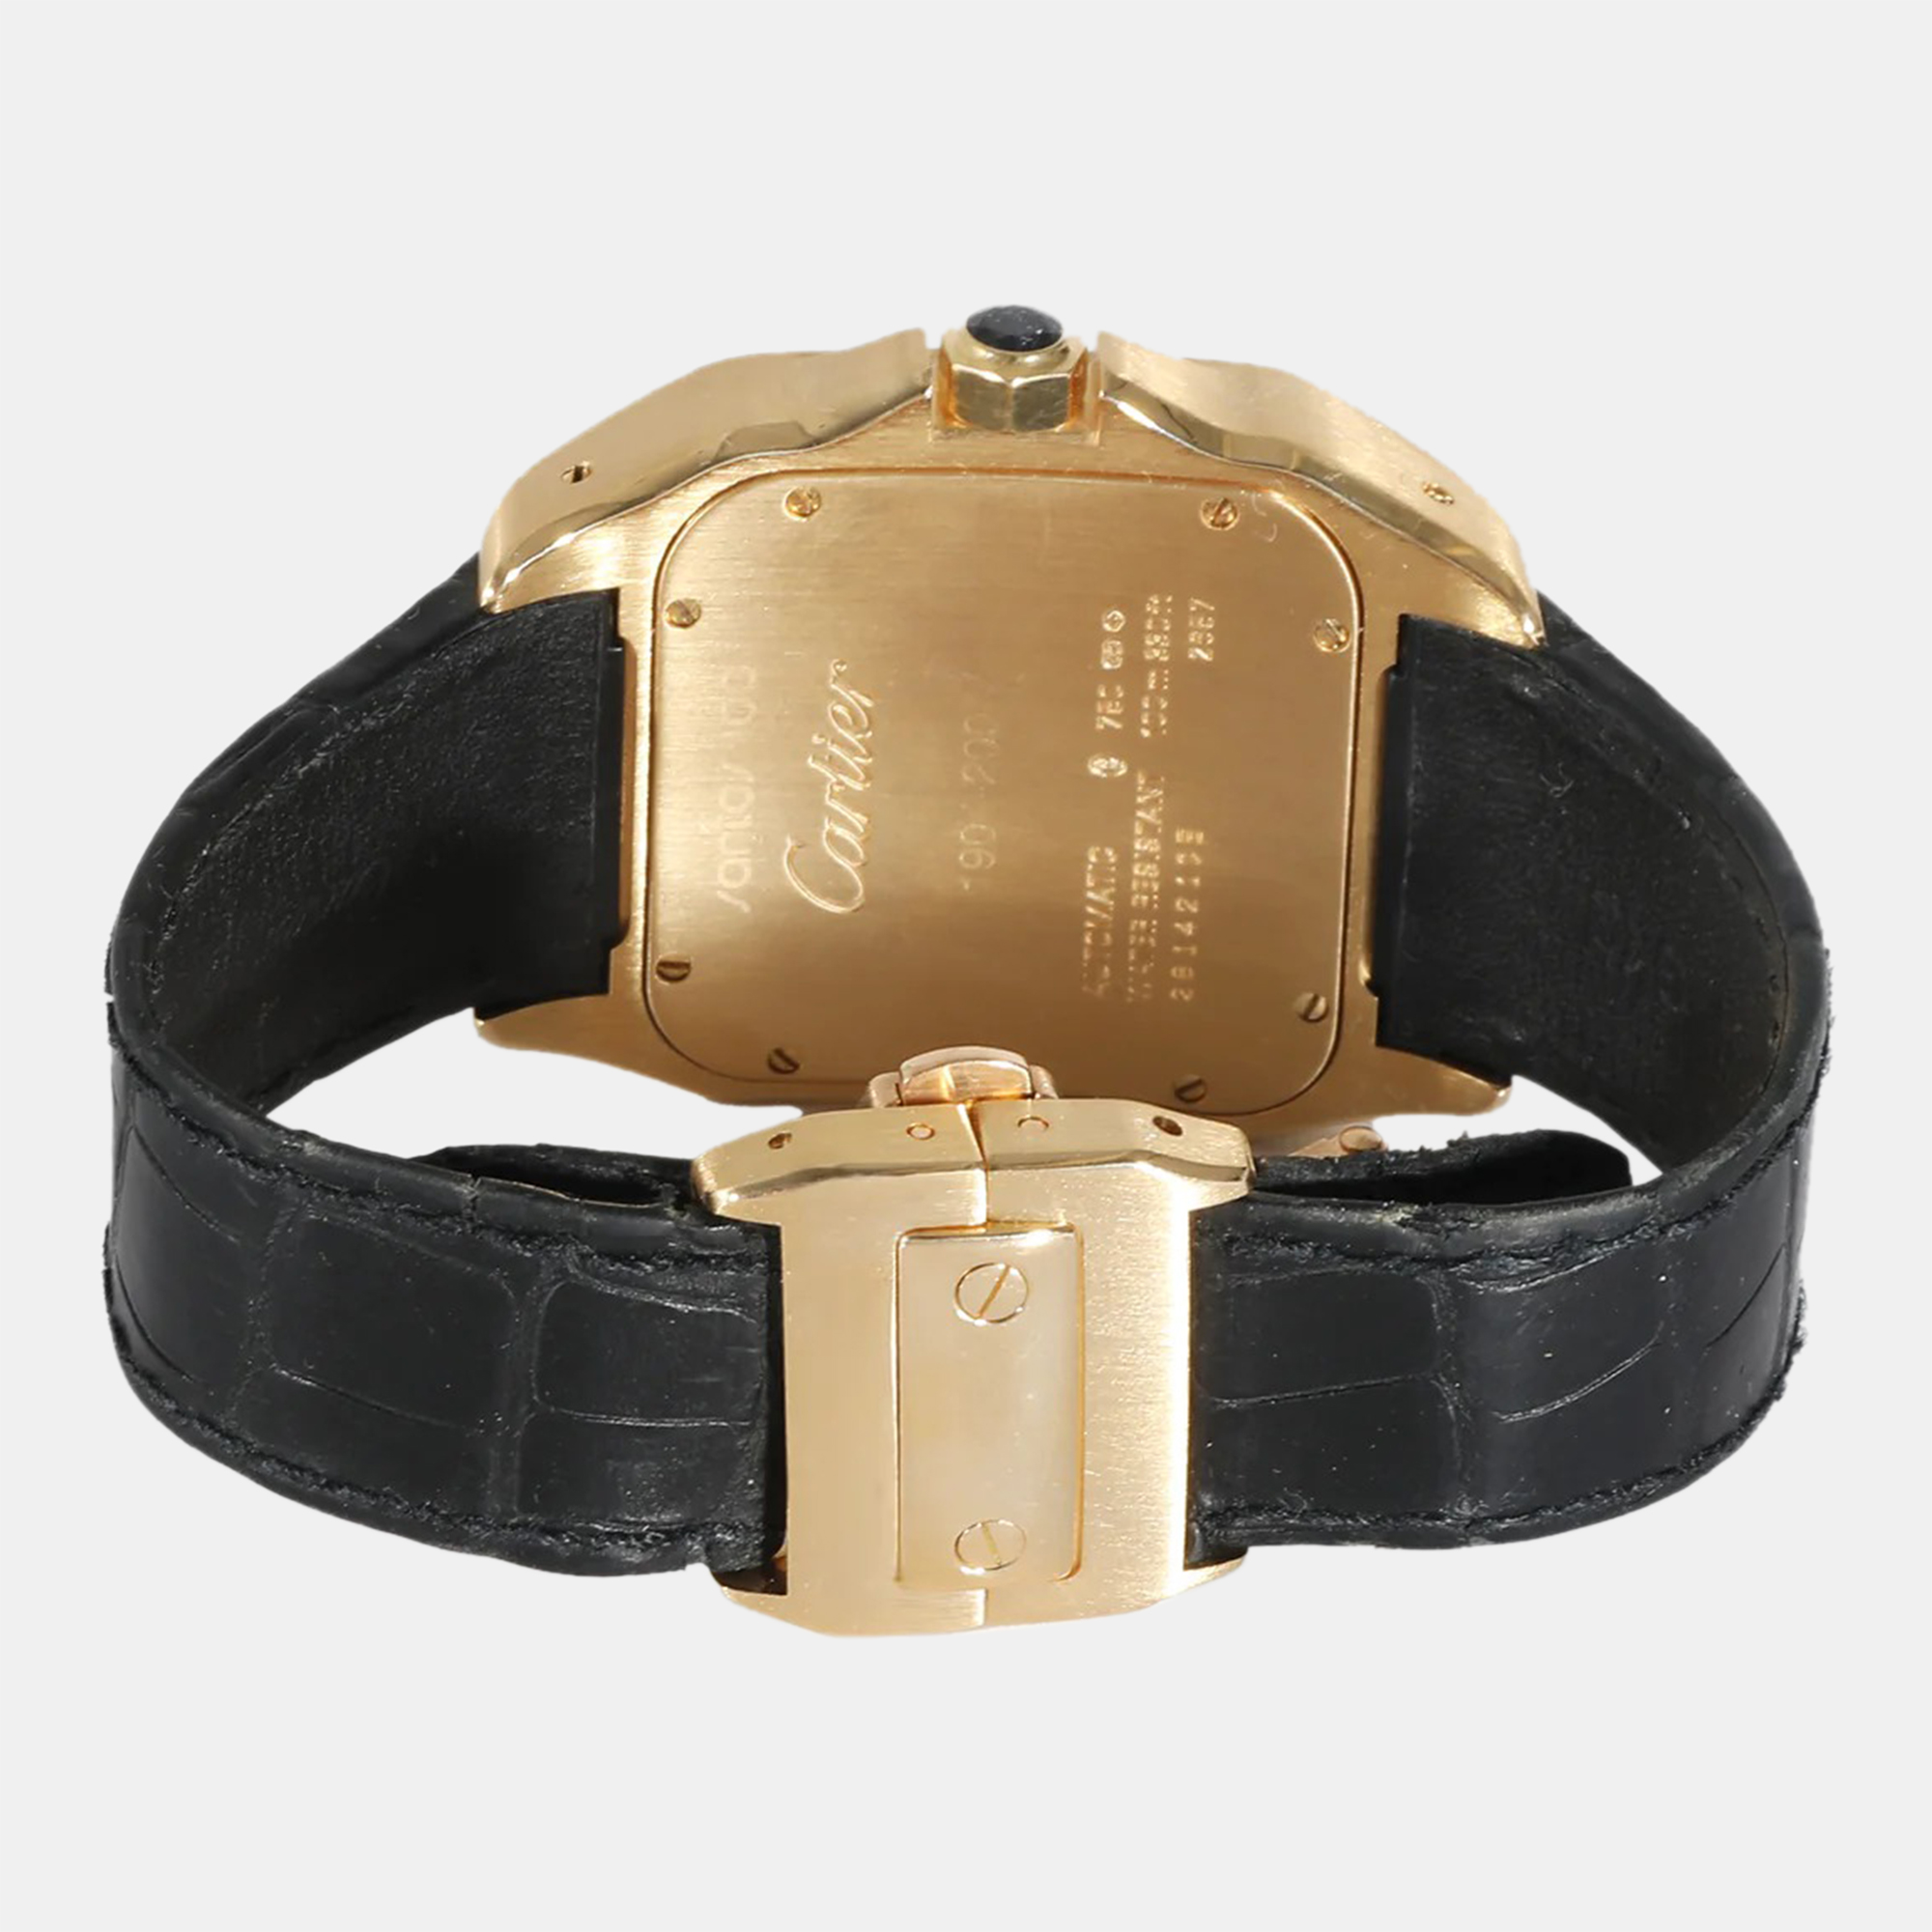 Cartier Silver 18k Yellow Gold Santos W20071Y1 Automatic Men's Wristwatch 38 Mm